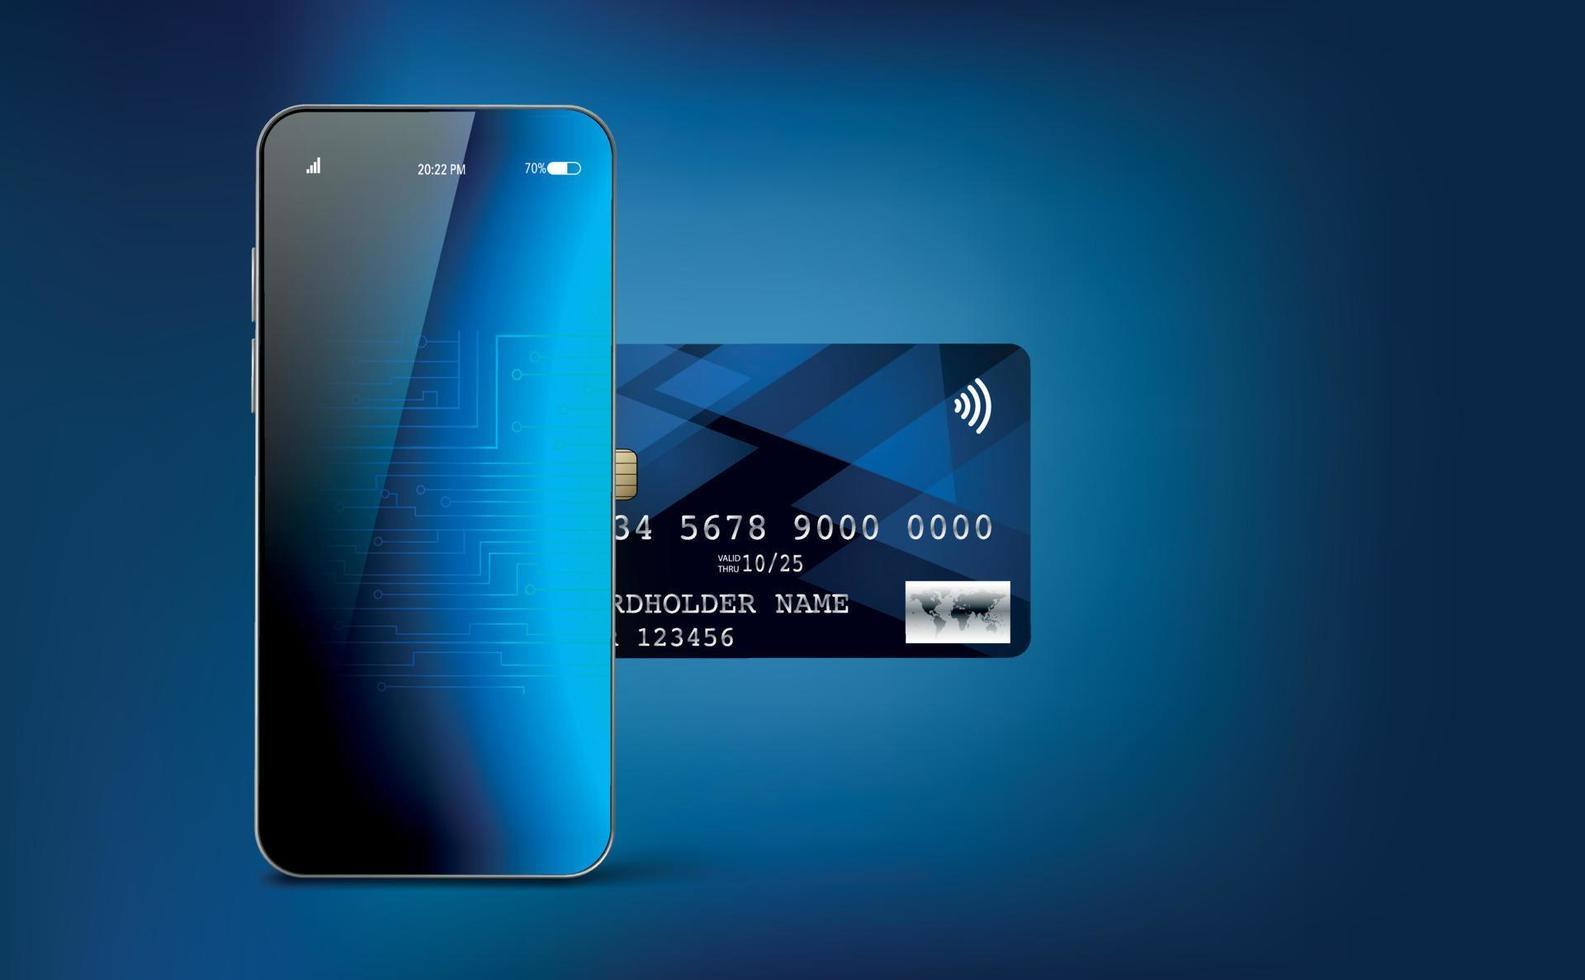 Bank digital credit card concept with mobile phone, blue gradient background. Vector illustration